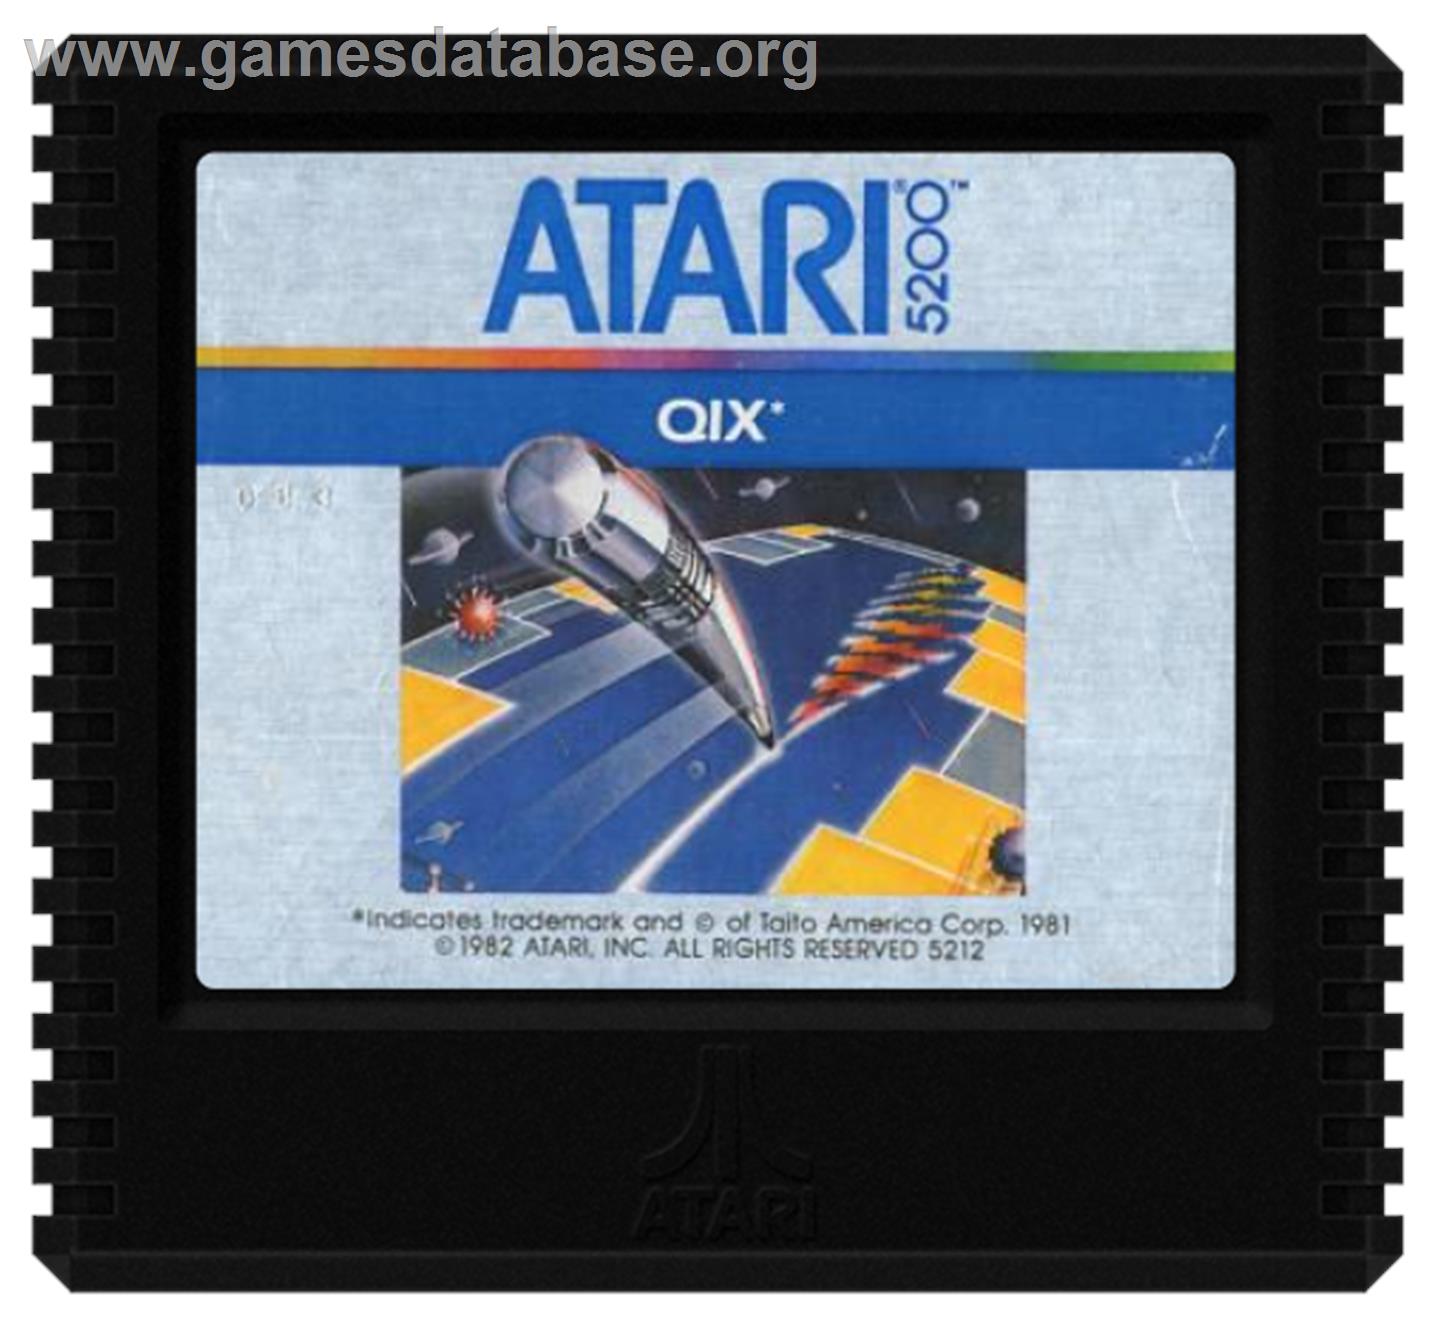 Qix - Atari 5200 - Artwork - Cartridge